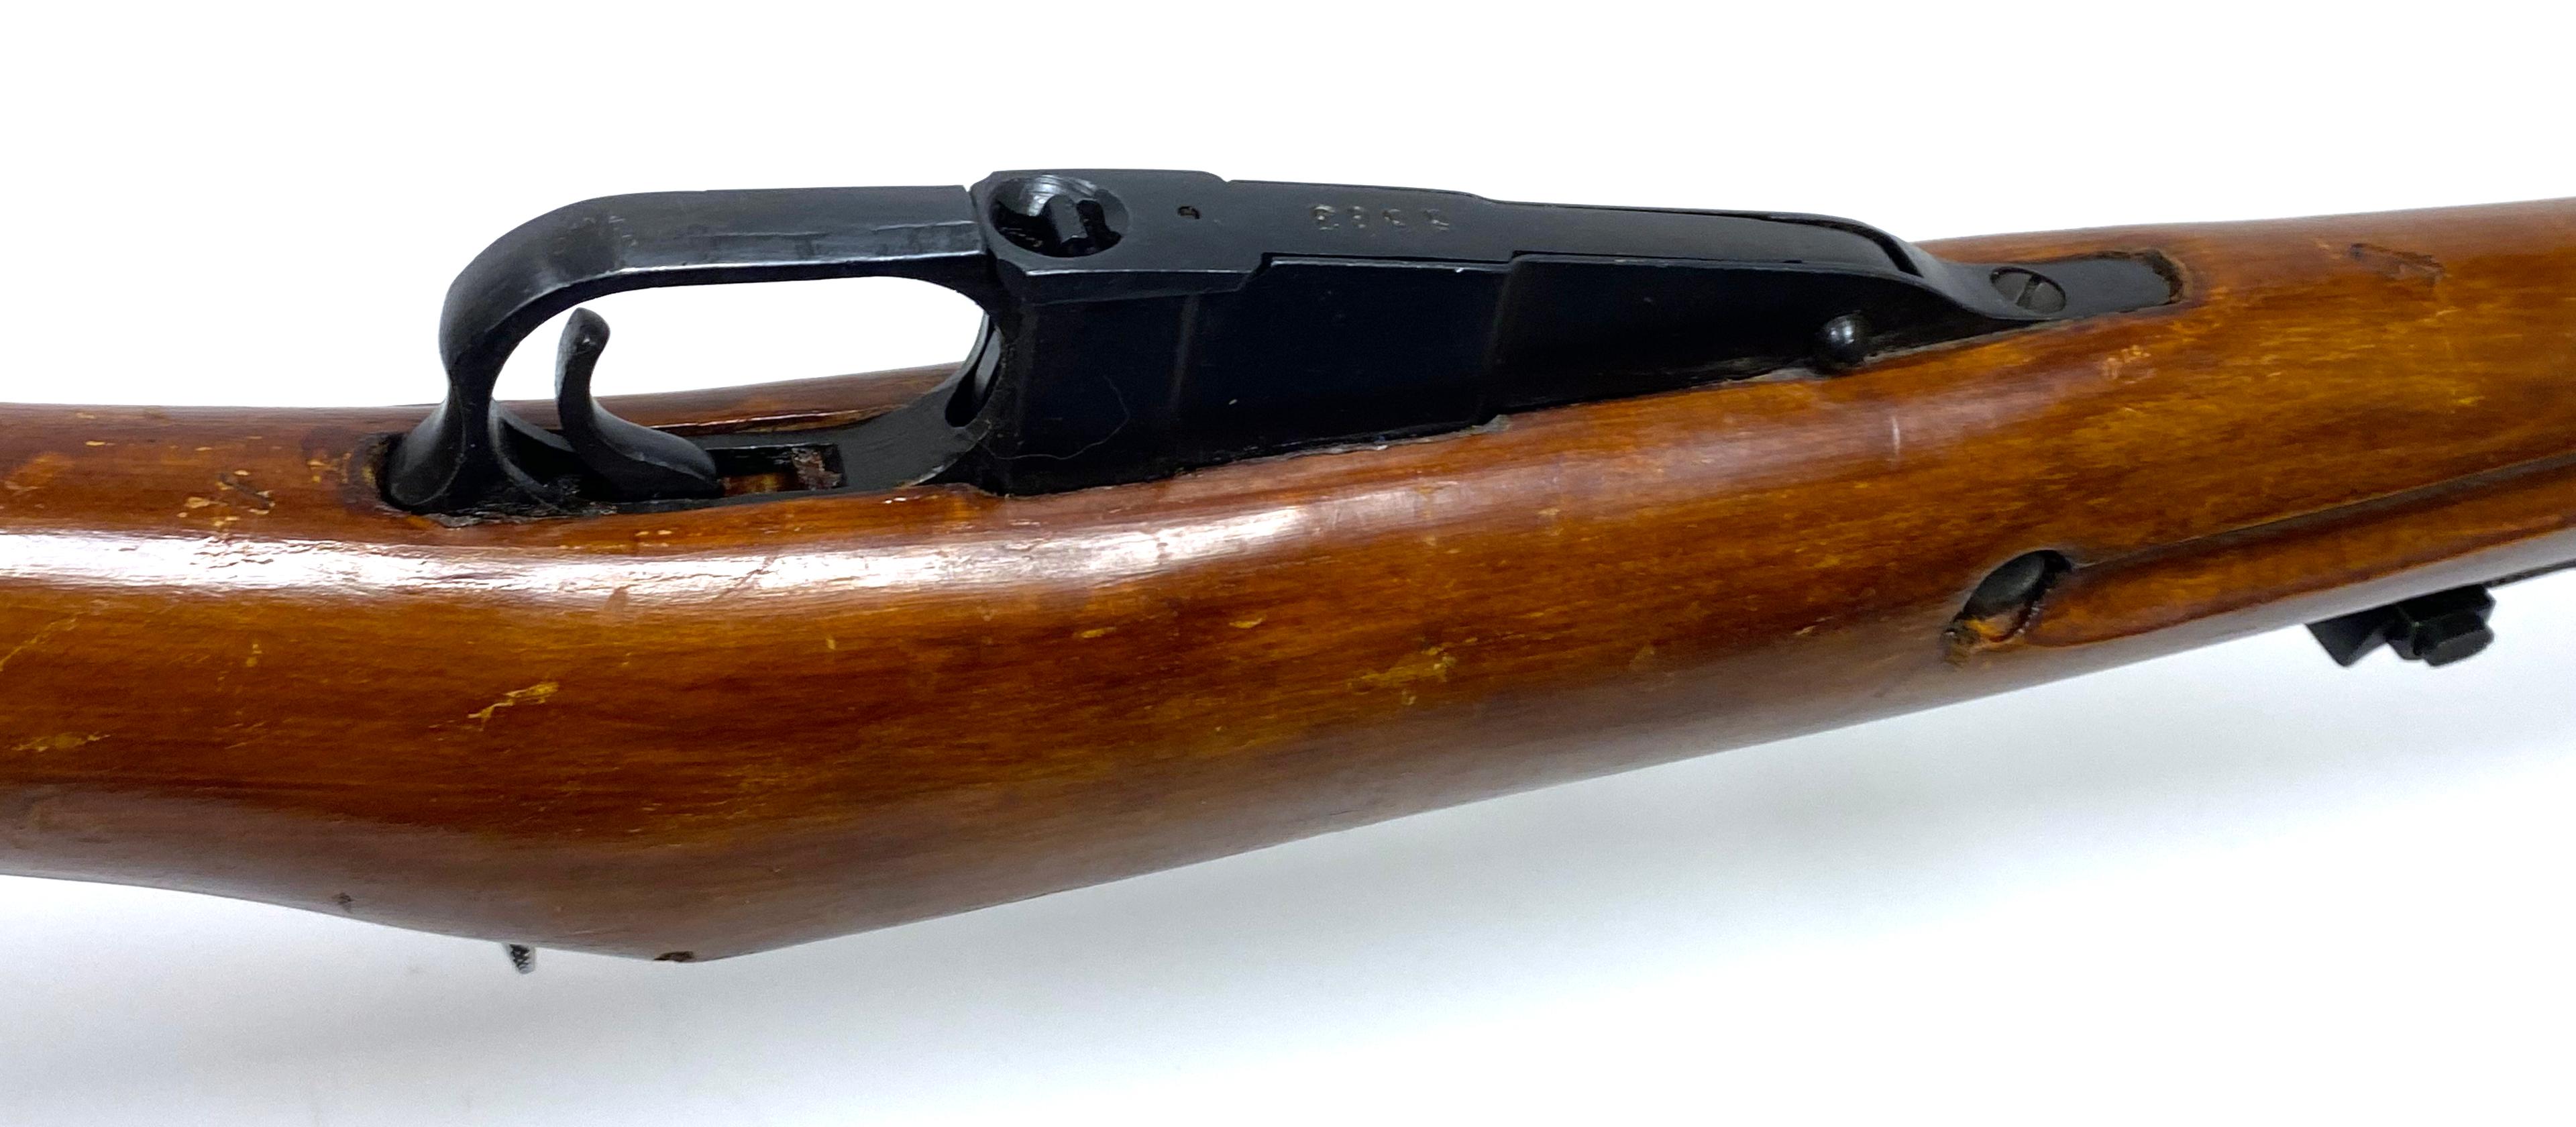 Excellent WWII 1942 Izhevsk Mosin-Nagant M91/30 7.62x54r Bolt Action Rifle w/ Matching Bayonet